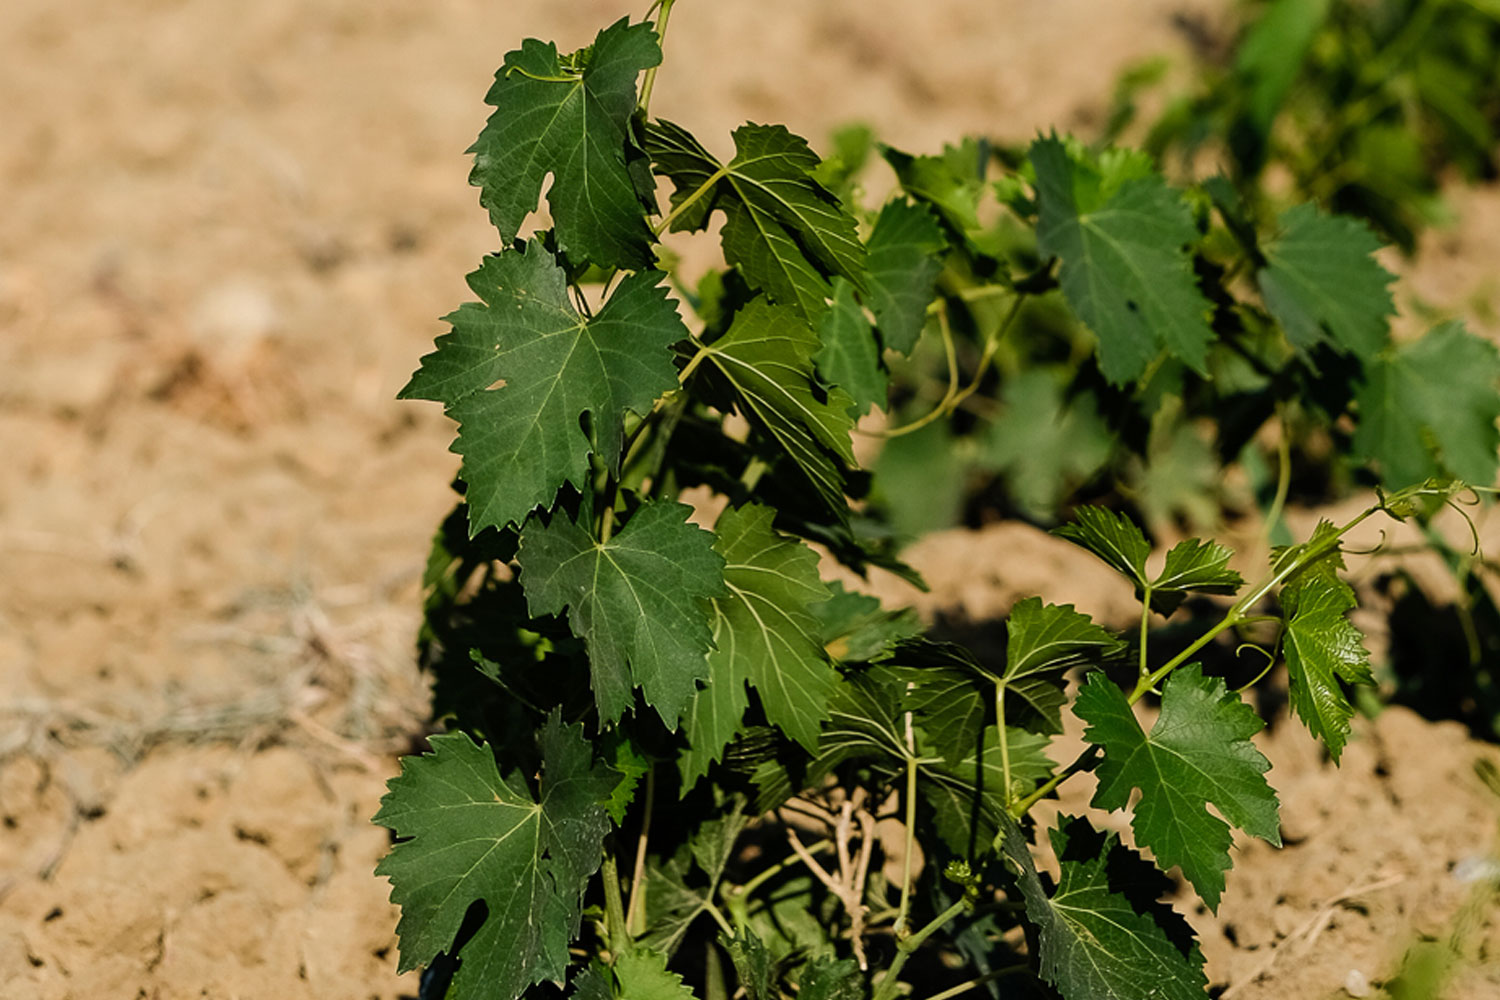 Azienda Agraria Fossacolle - Brunello di Montalcino DOCG Producer - The vineyard